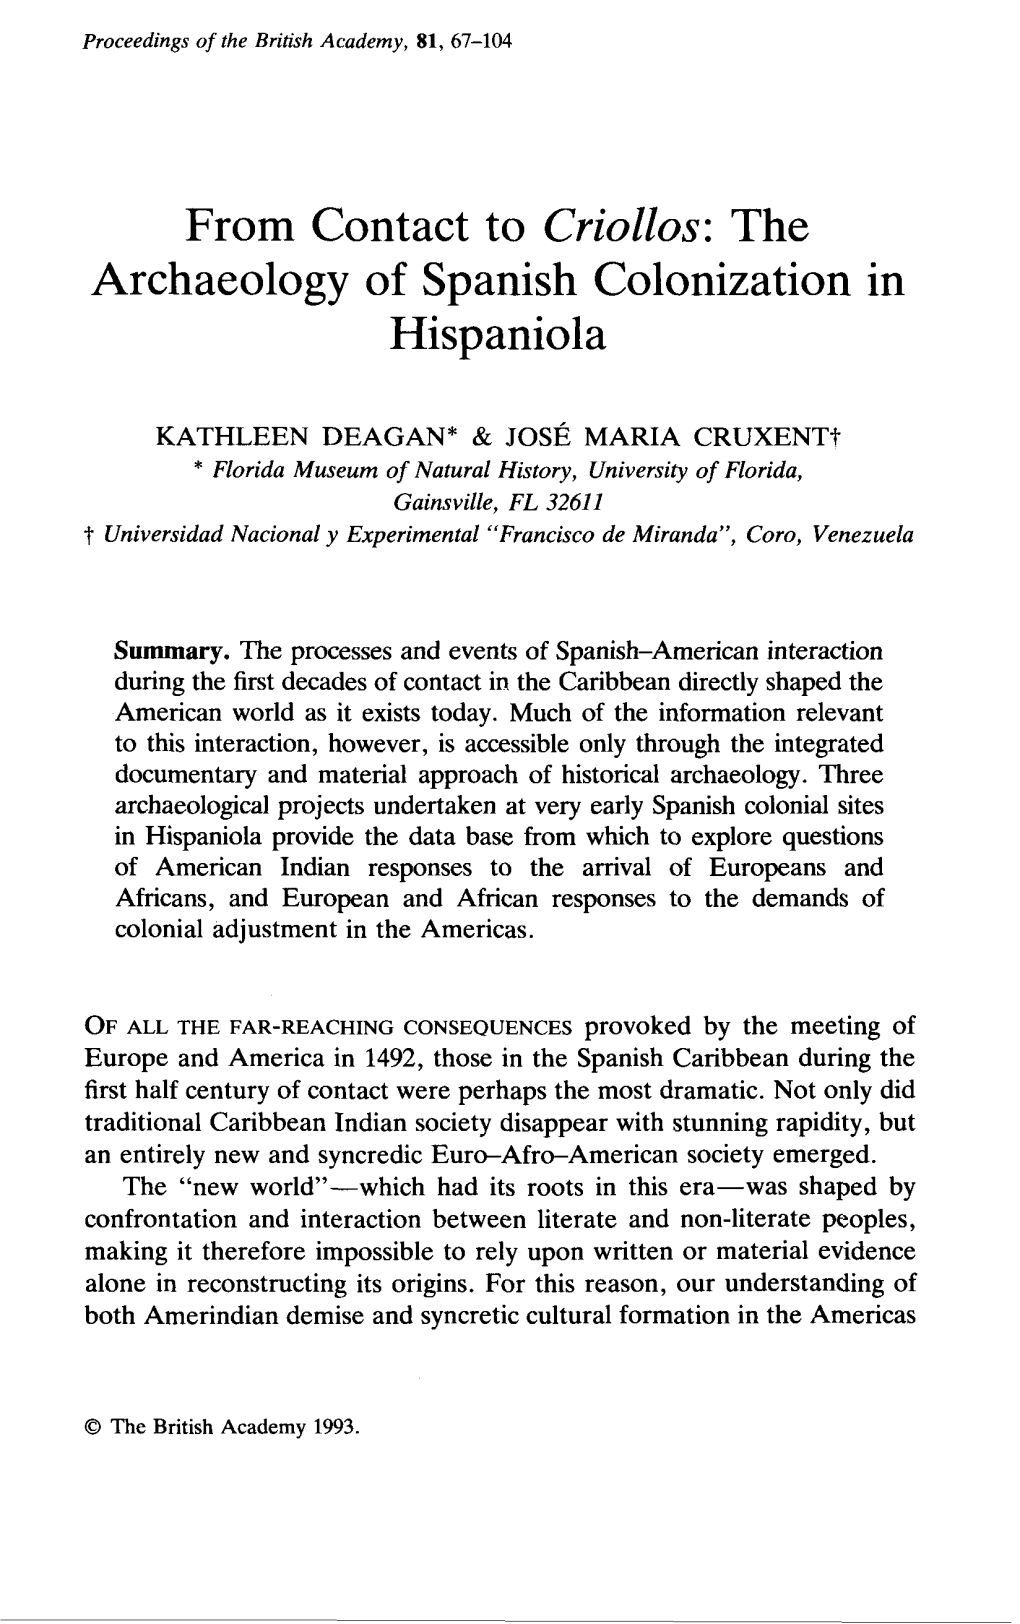 The Archaeology of Spanish Colonization in Hispaniola